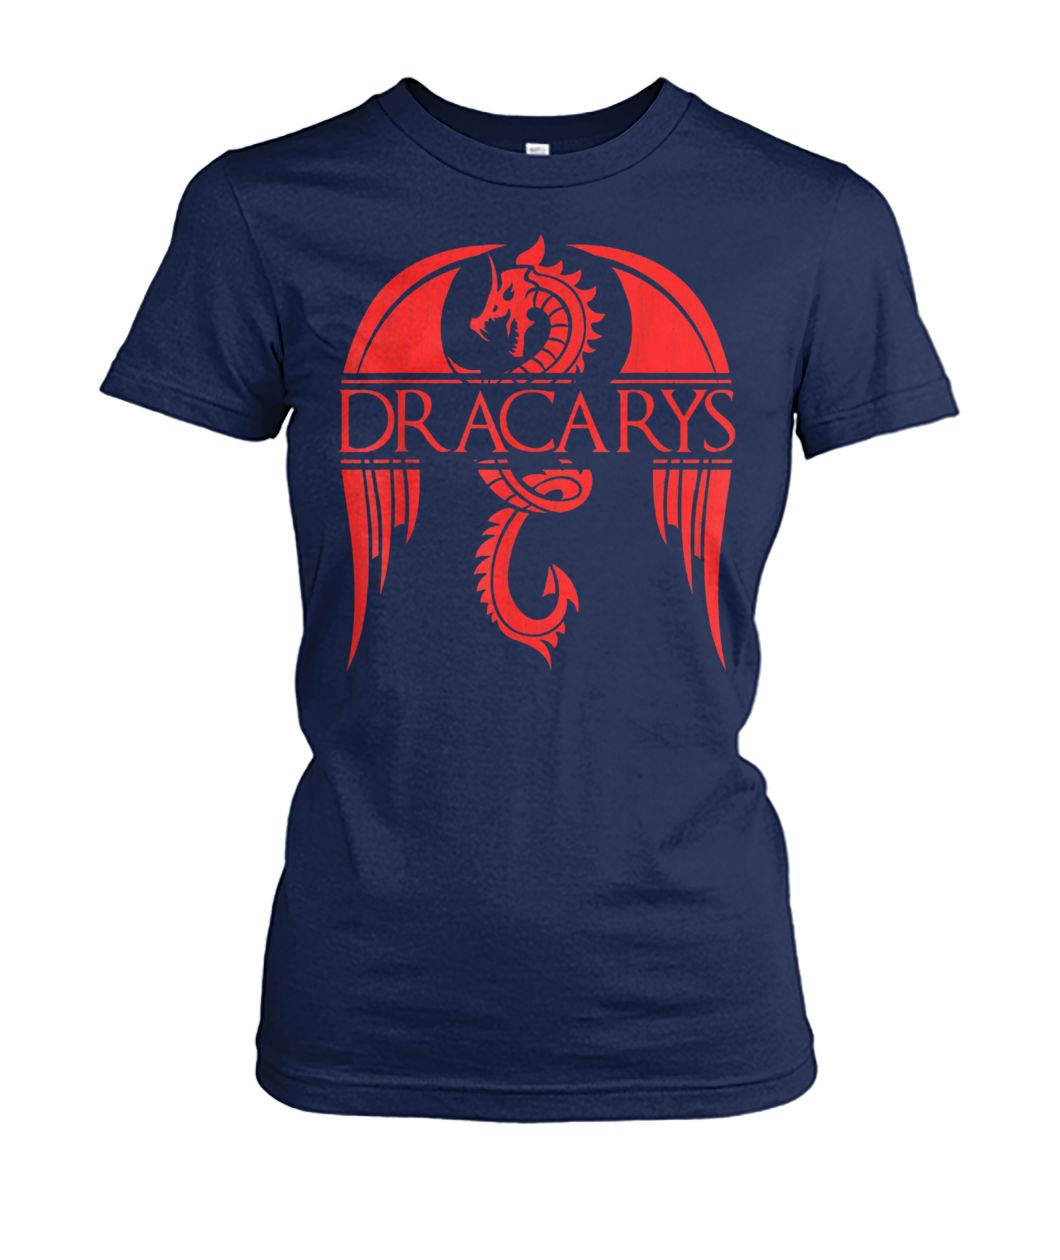 Dragon dracarys game of thrones women's crew tee